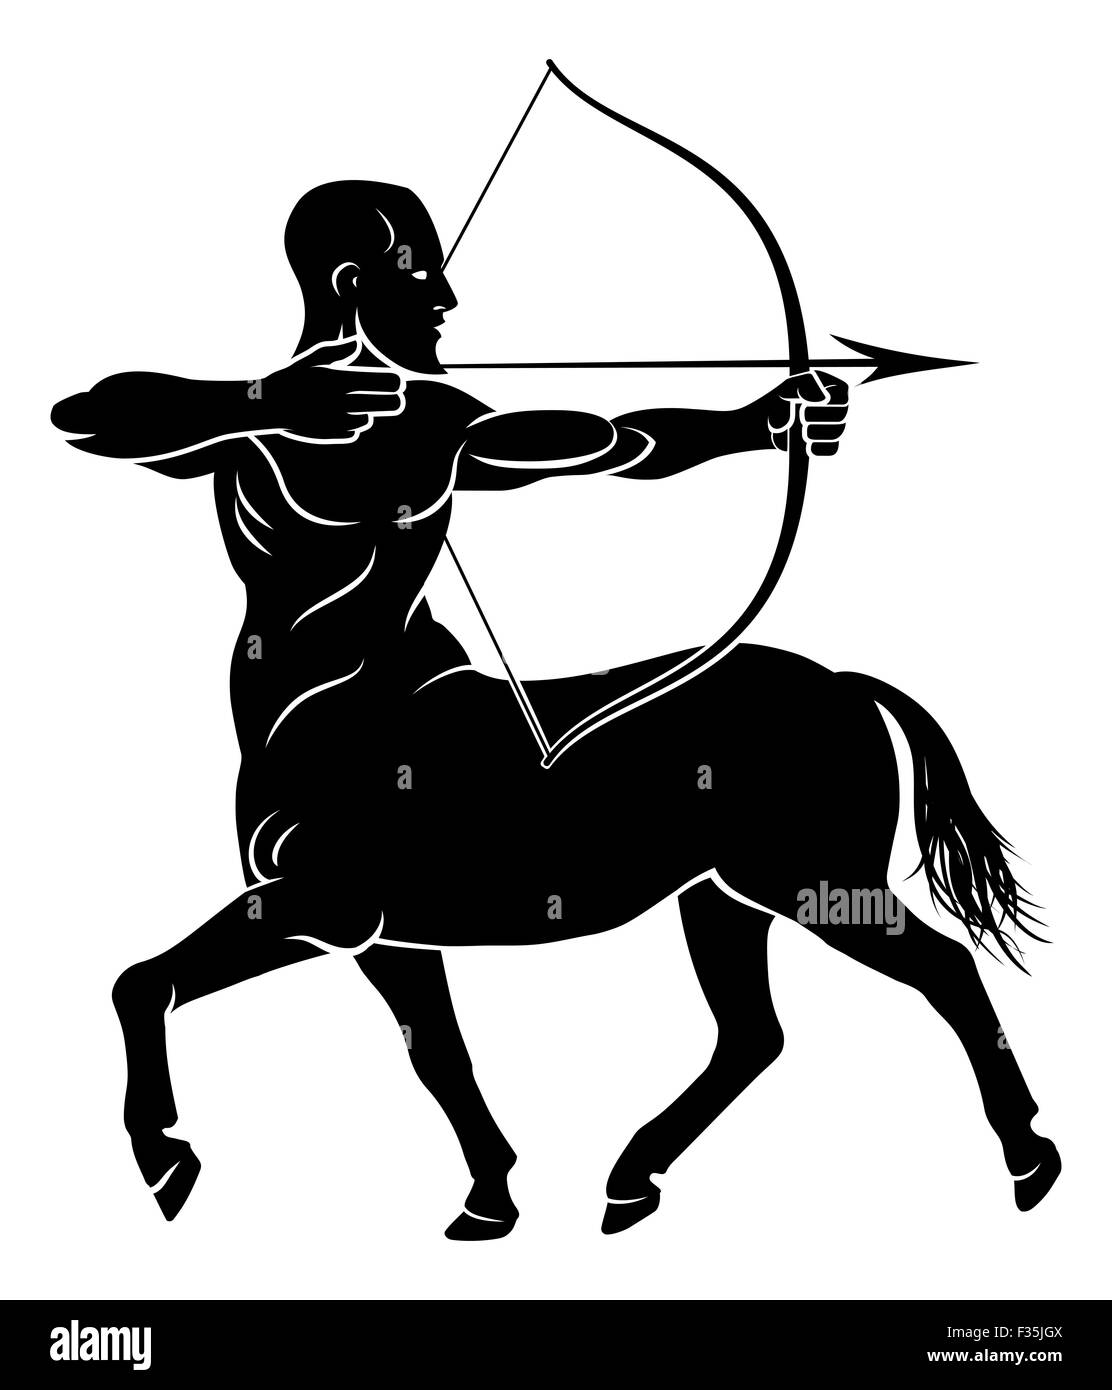 Archer centaur half horse half man character holding a bow and arrows Stock Photo